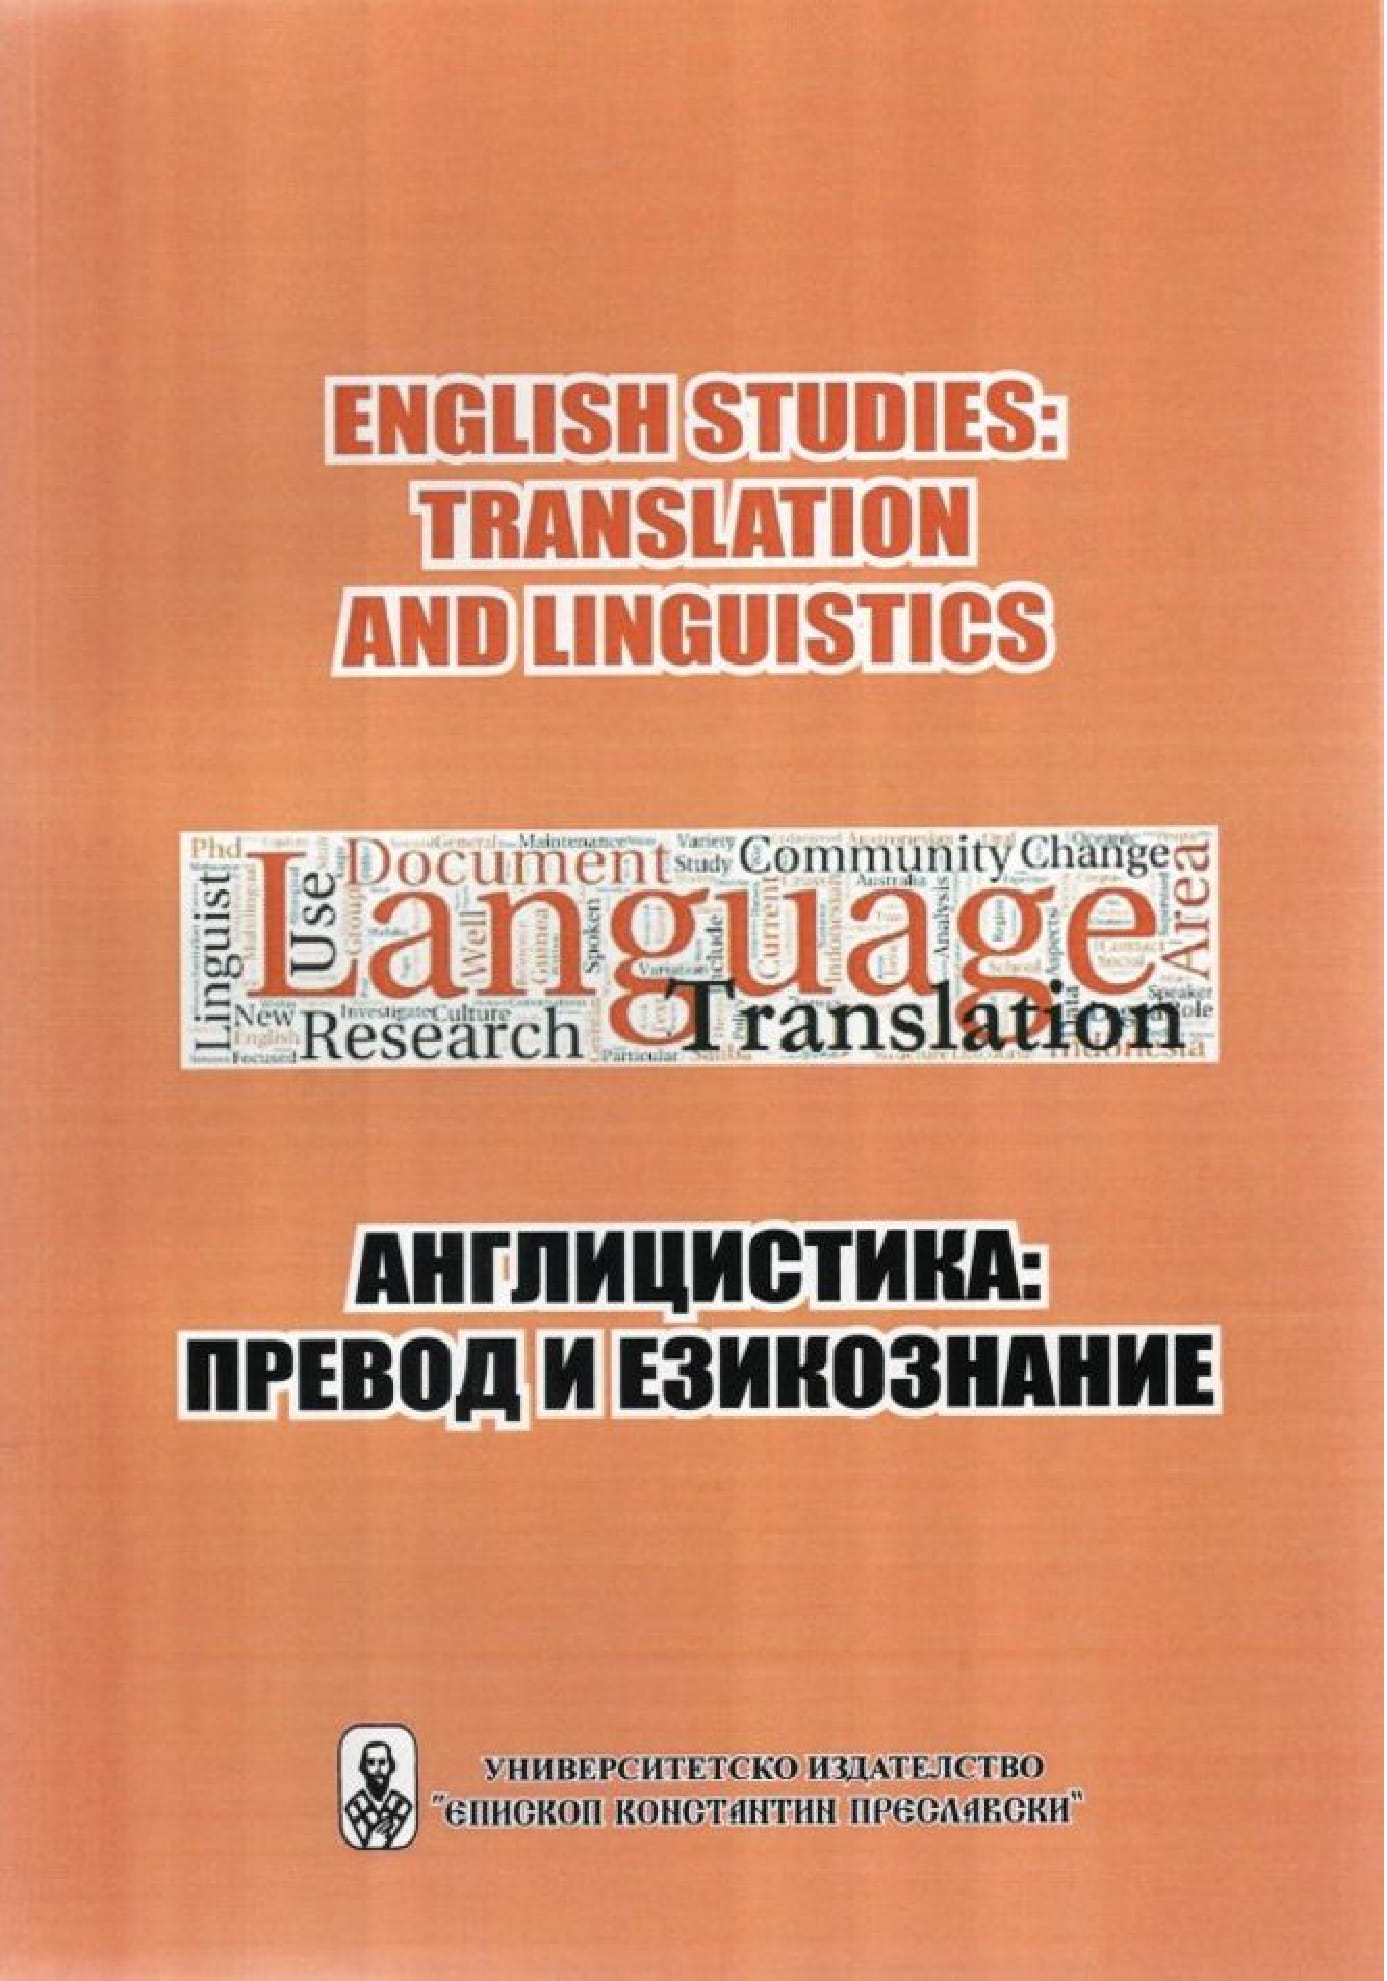 Original Texts In Bulgarian Cover Image